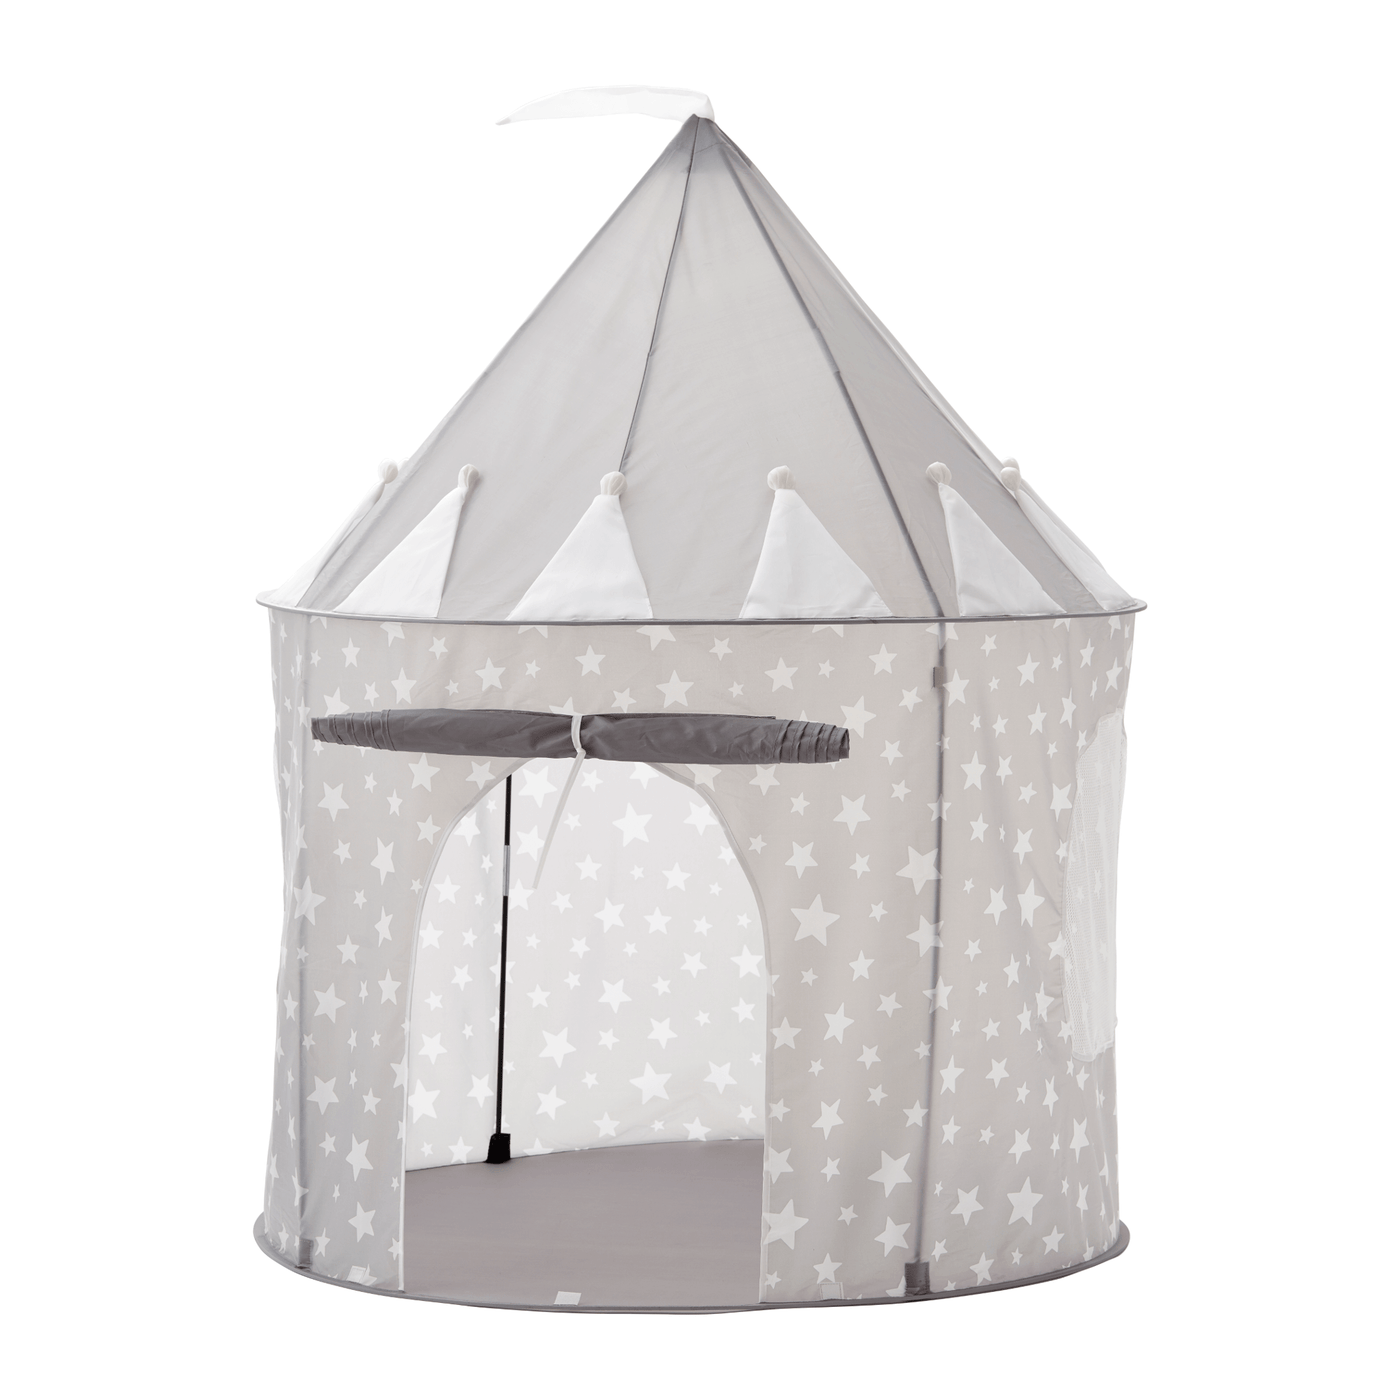 Kids Concept Grey Star Pop up Play Tent